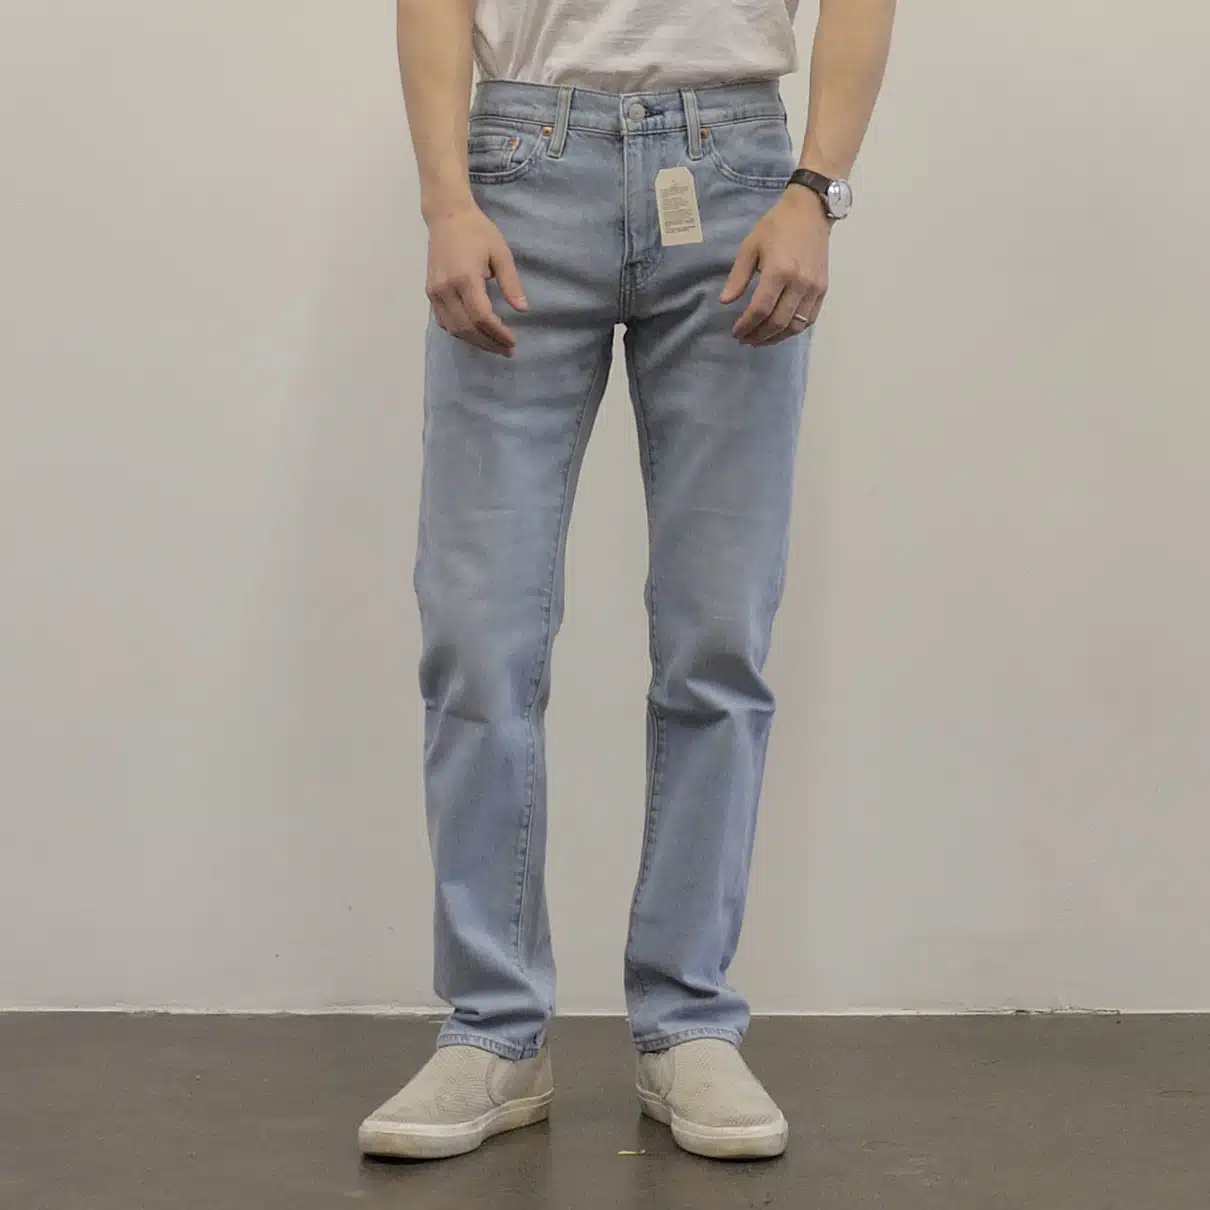 Levi’s Fits Explained: Comparison of Jeans Fits – BuyProwl.com